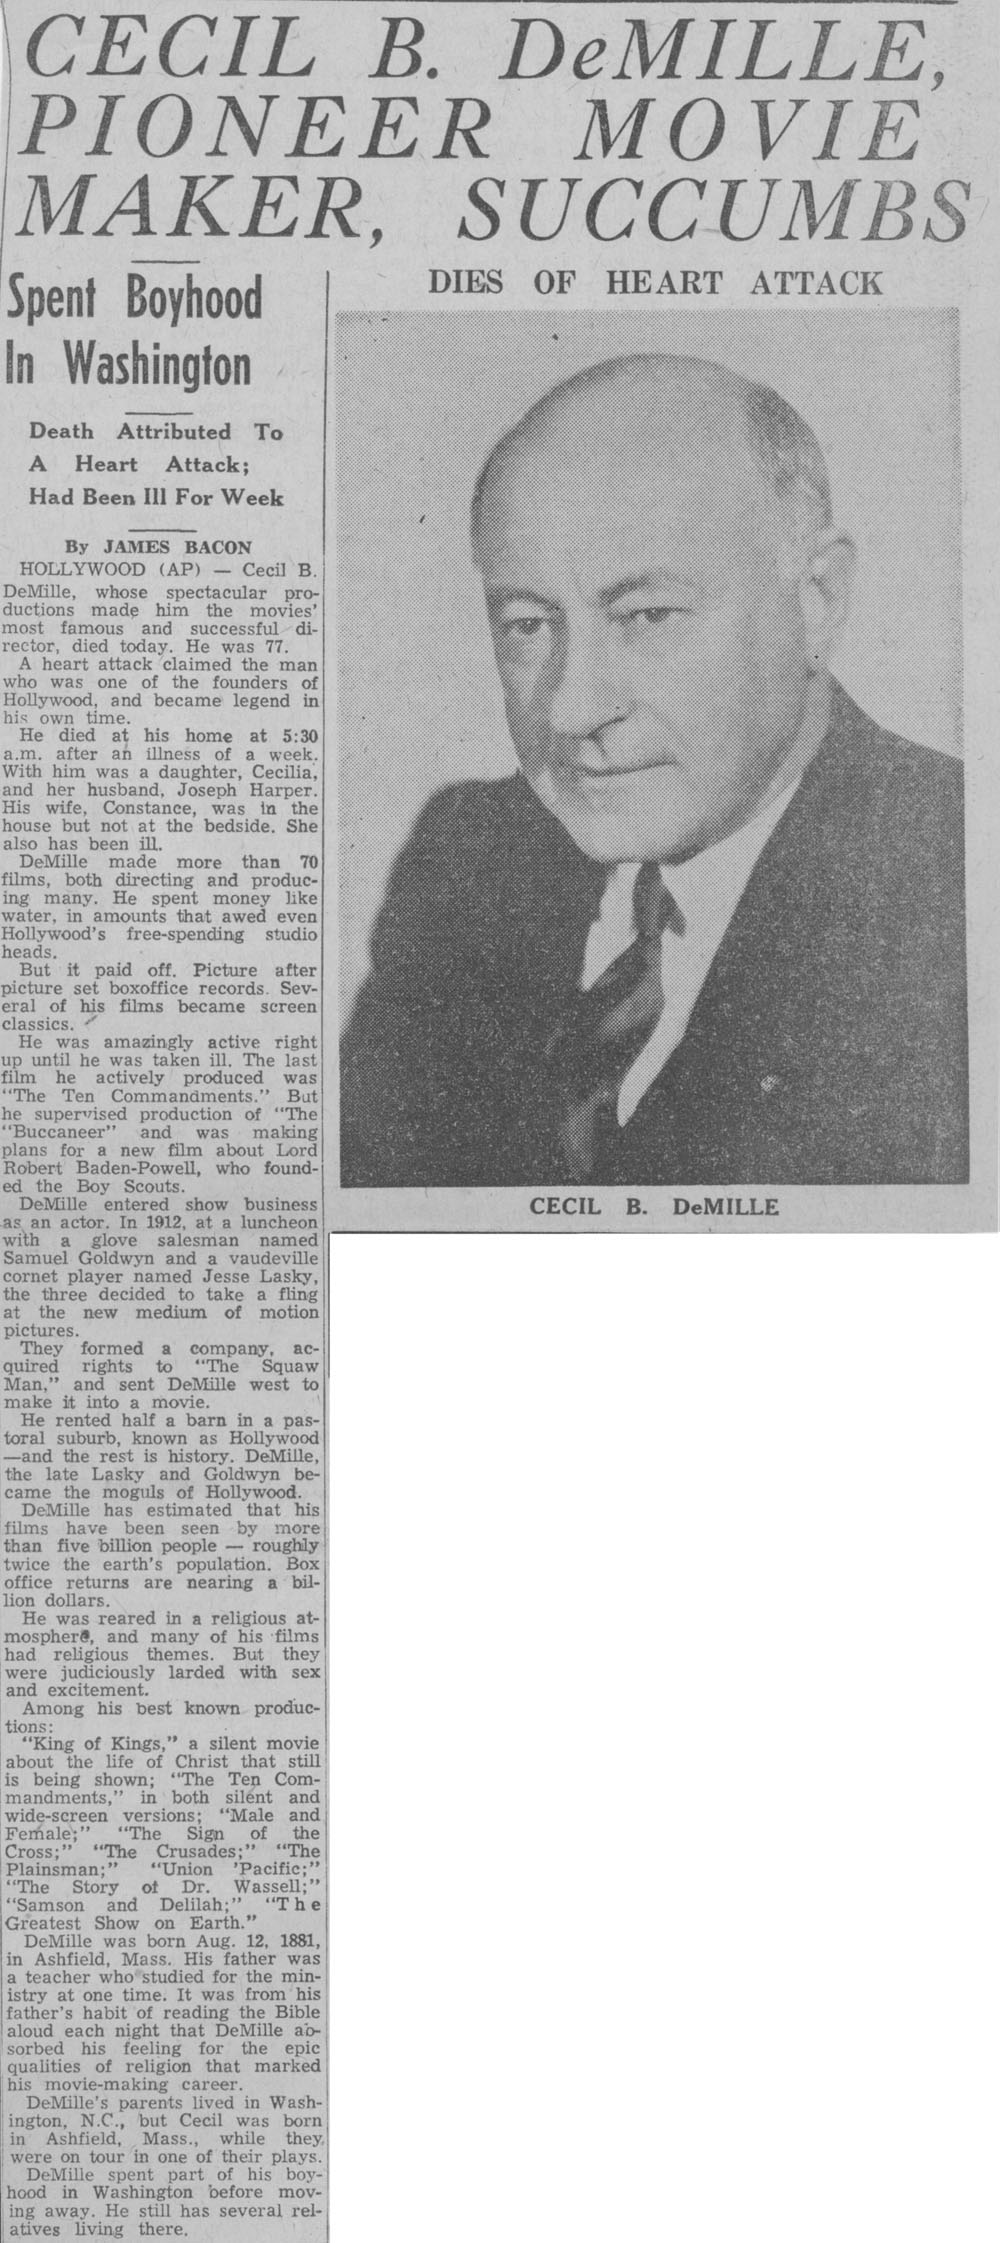 Cecil B. DeMille pioneer movie maker